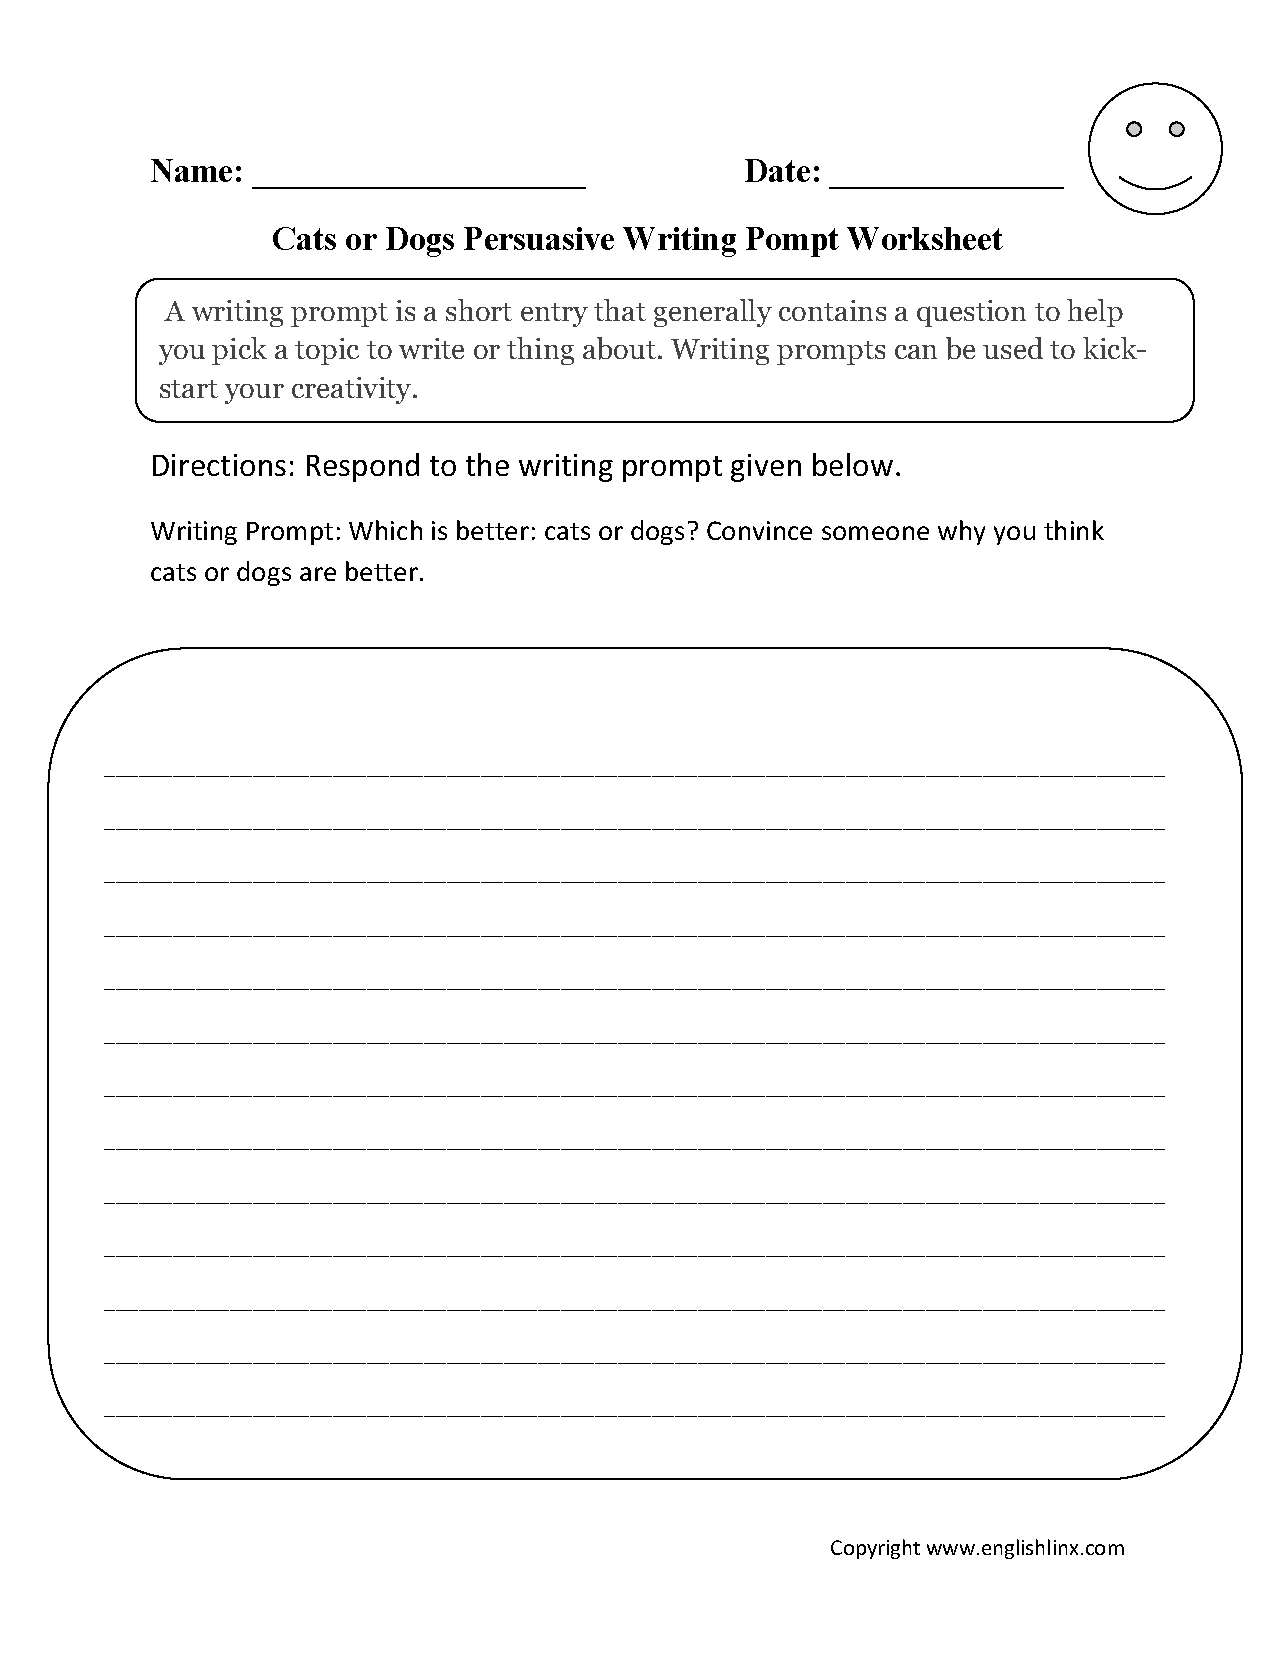 Writing Prompts Worksheets | Persuasive Writing Prompts Worksheets for 6Th Grade Writing Worksheets Printable Free